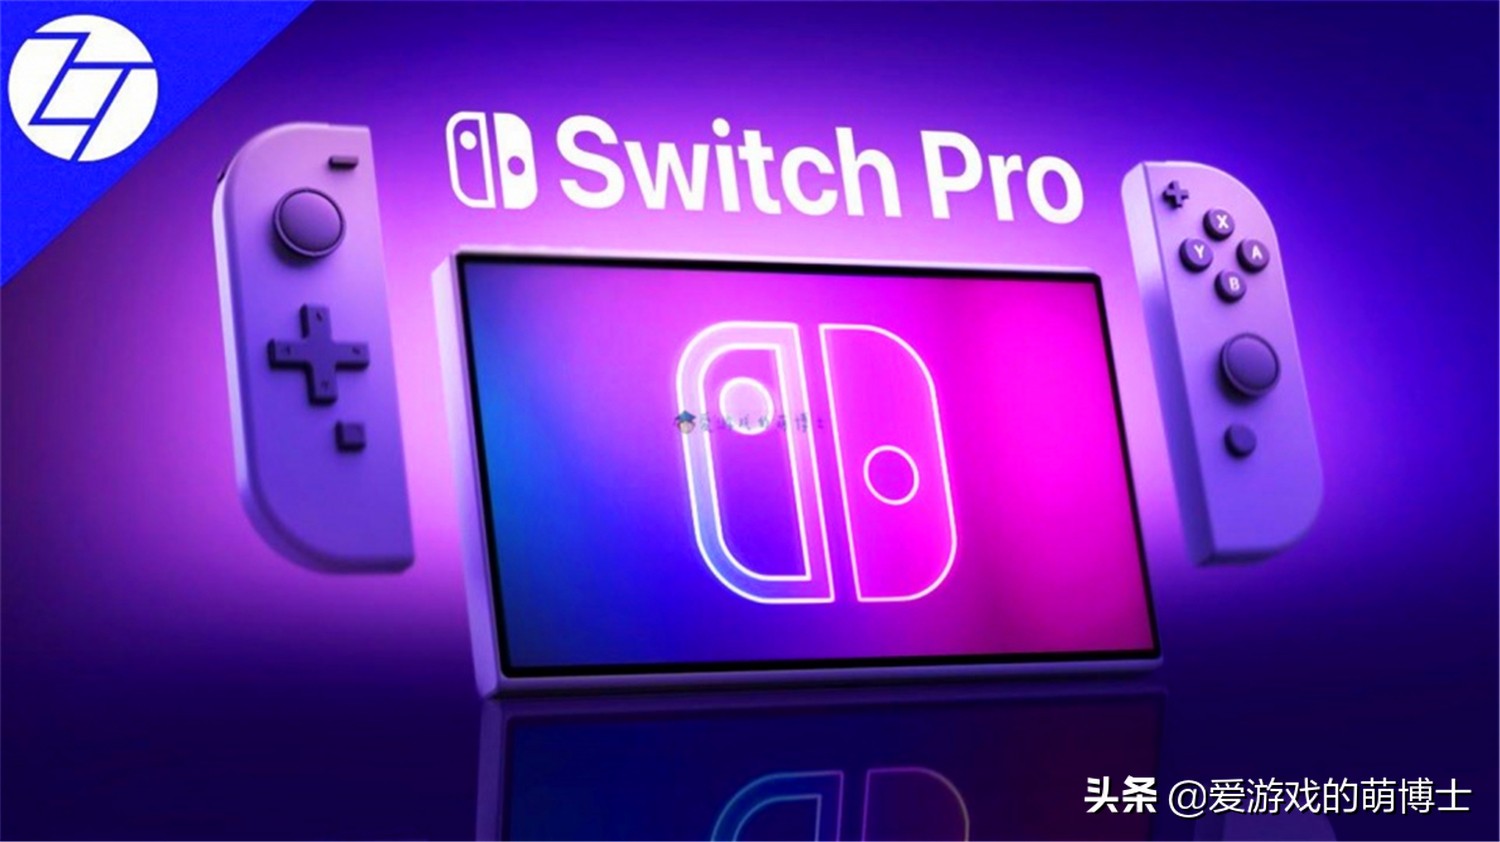 switch pro为什么没有出现在2021年e3活动中